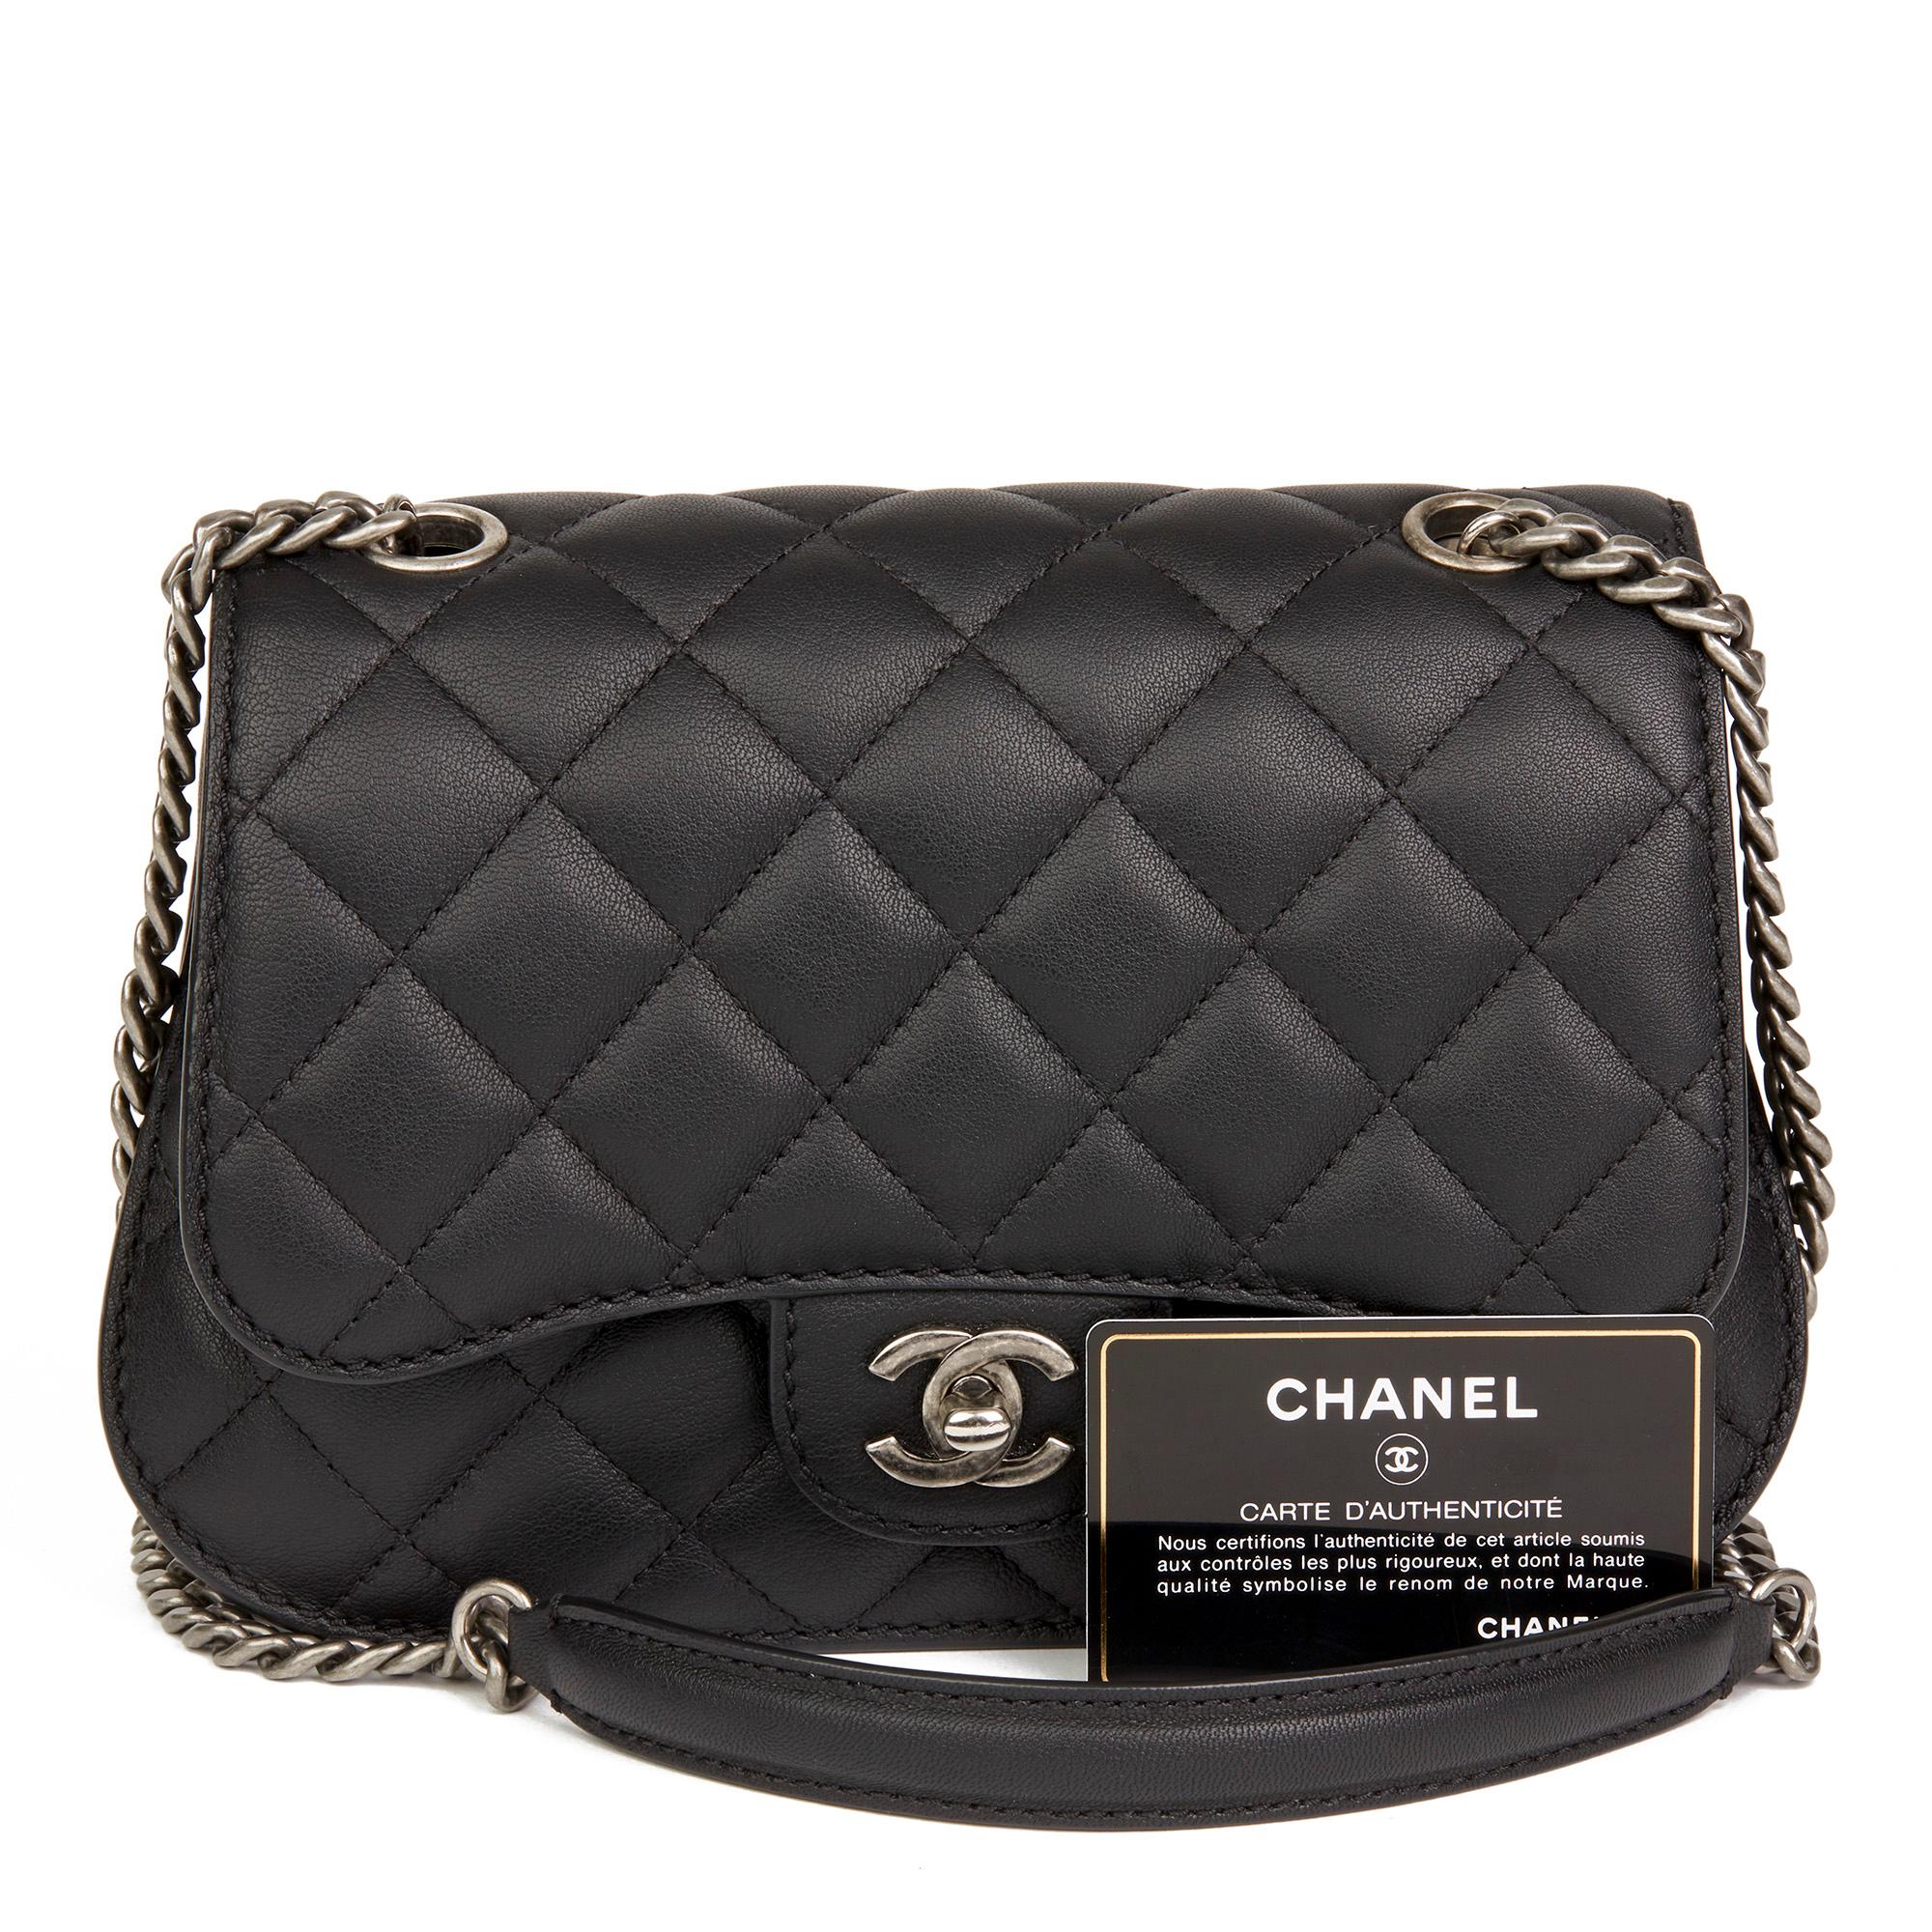 2017 Chanel Black Quilted Calfskin Leather Saddle Bag 5